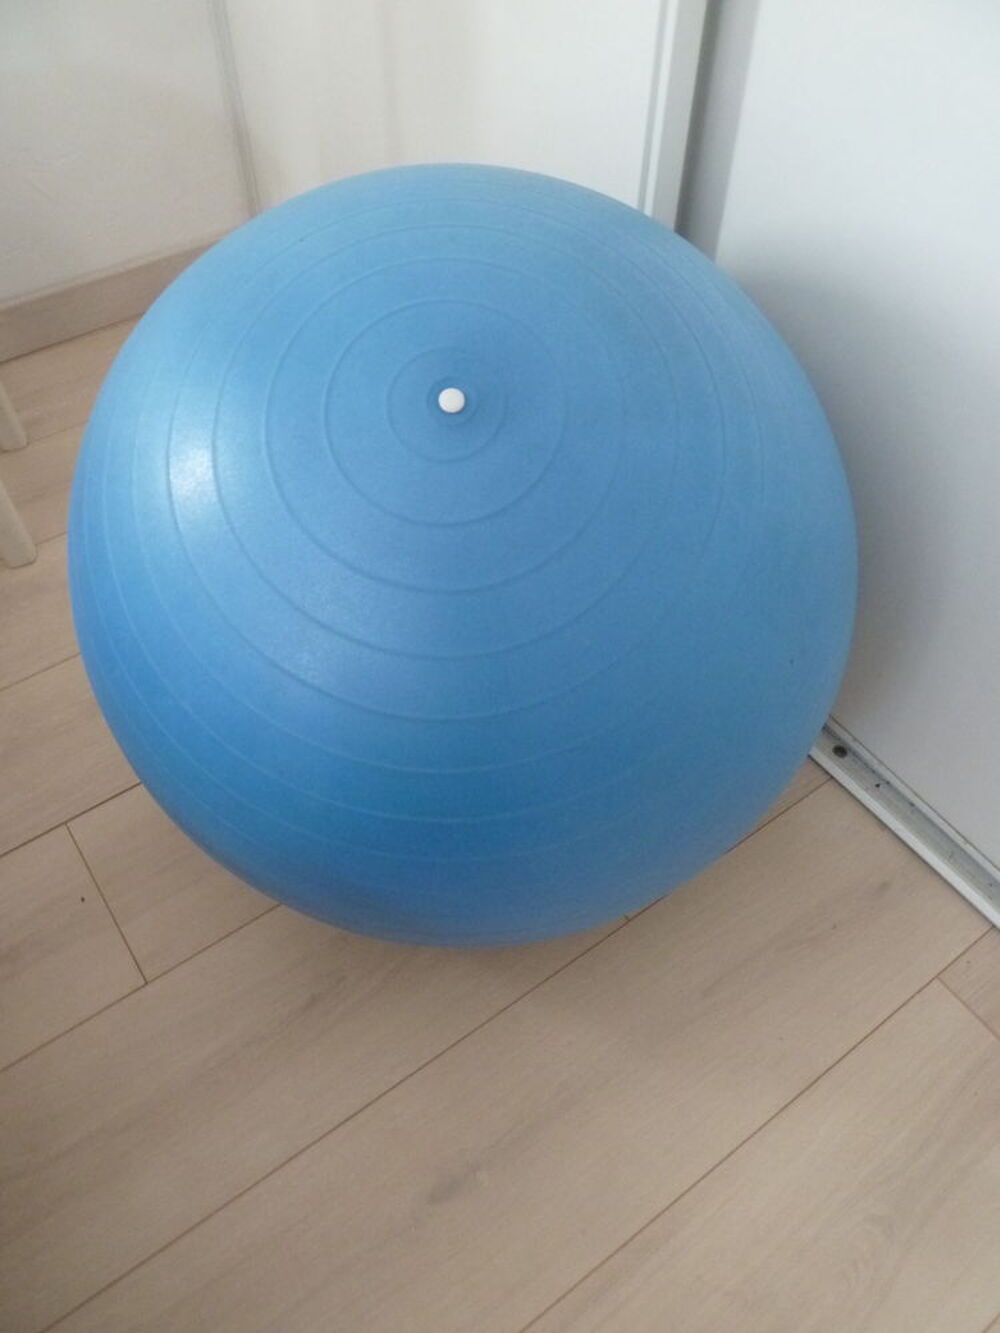 Ballon gym fitness pilate bleu
Sports